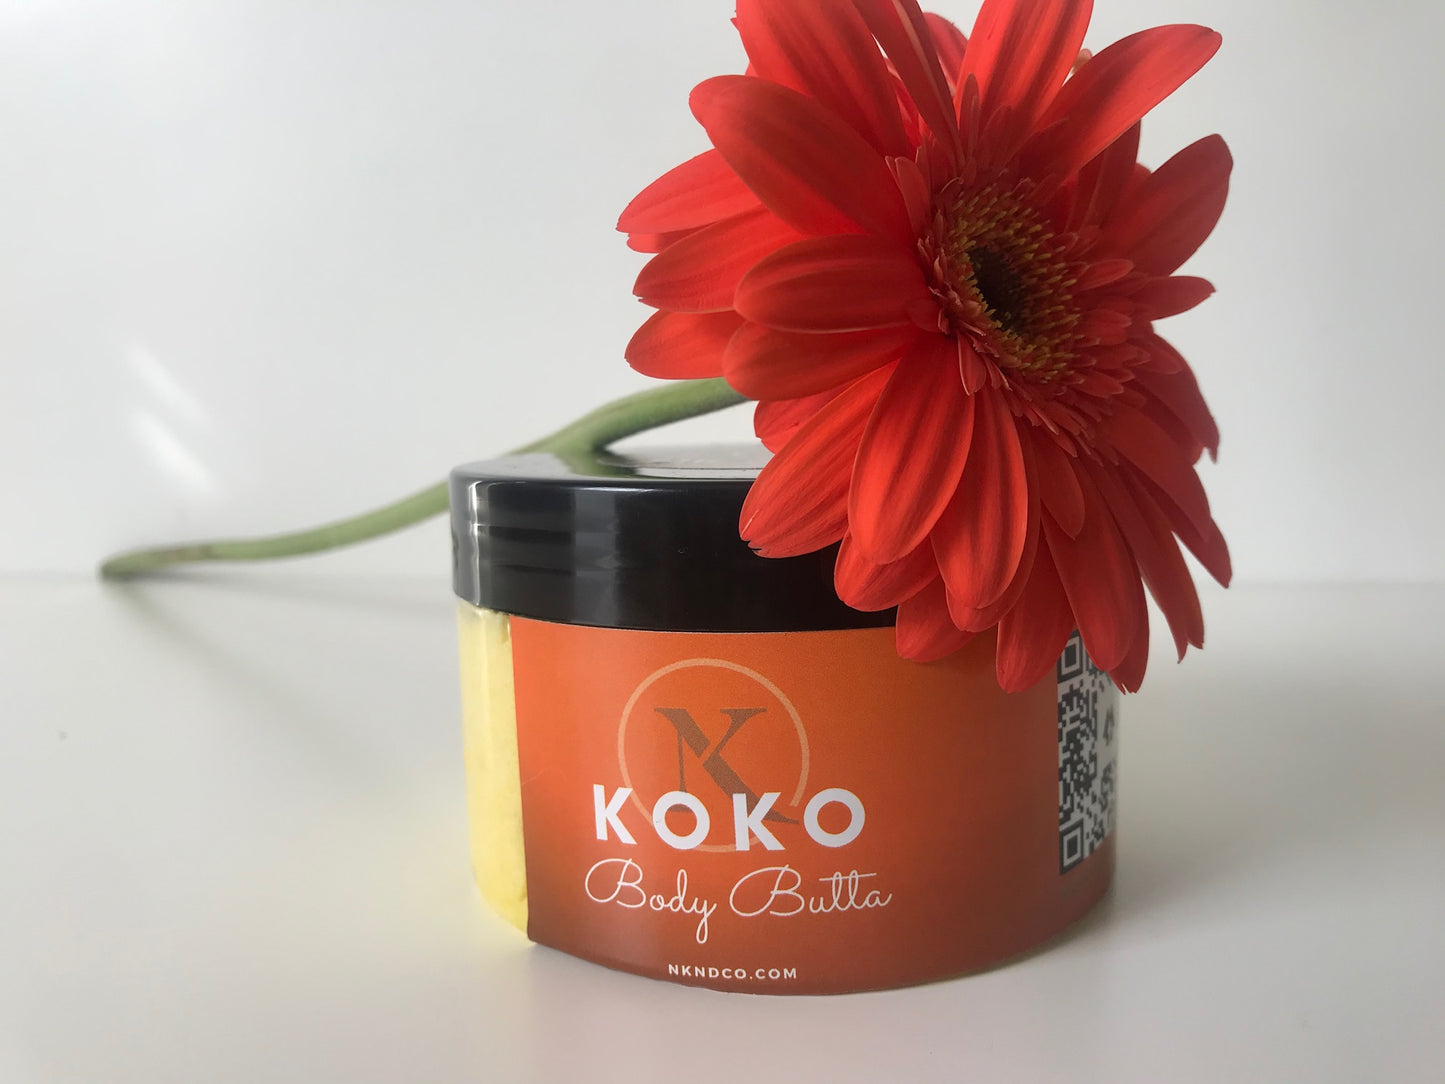 "Koko" Body Butter